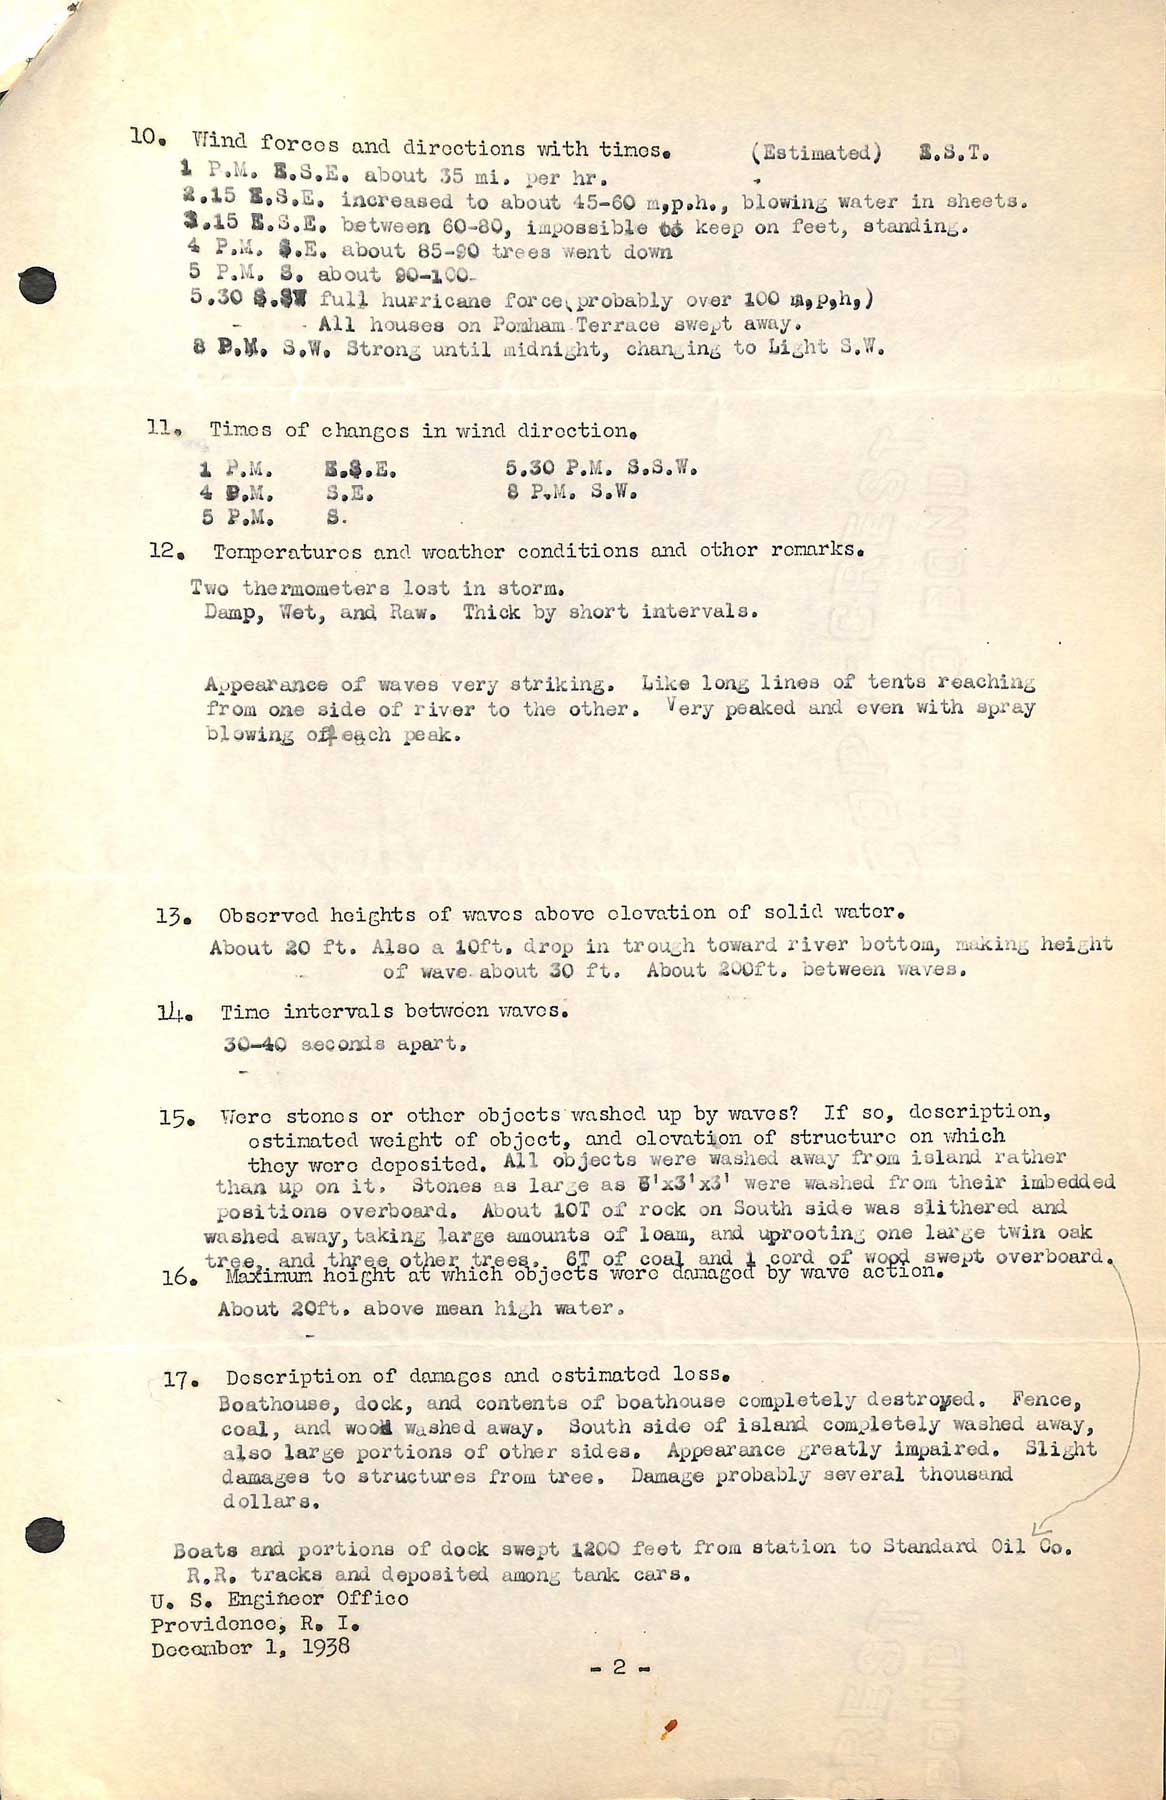 Pohman Rock Light - A questionnaire regarding the Effects of hurricane of September 21, 1938